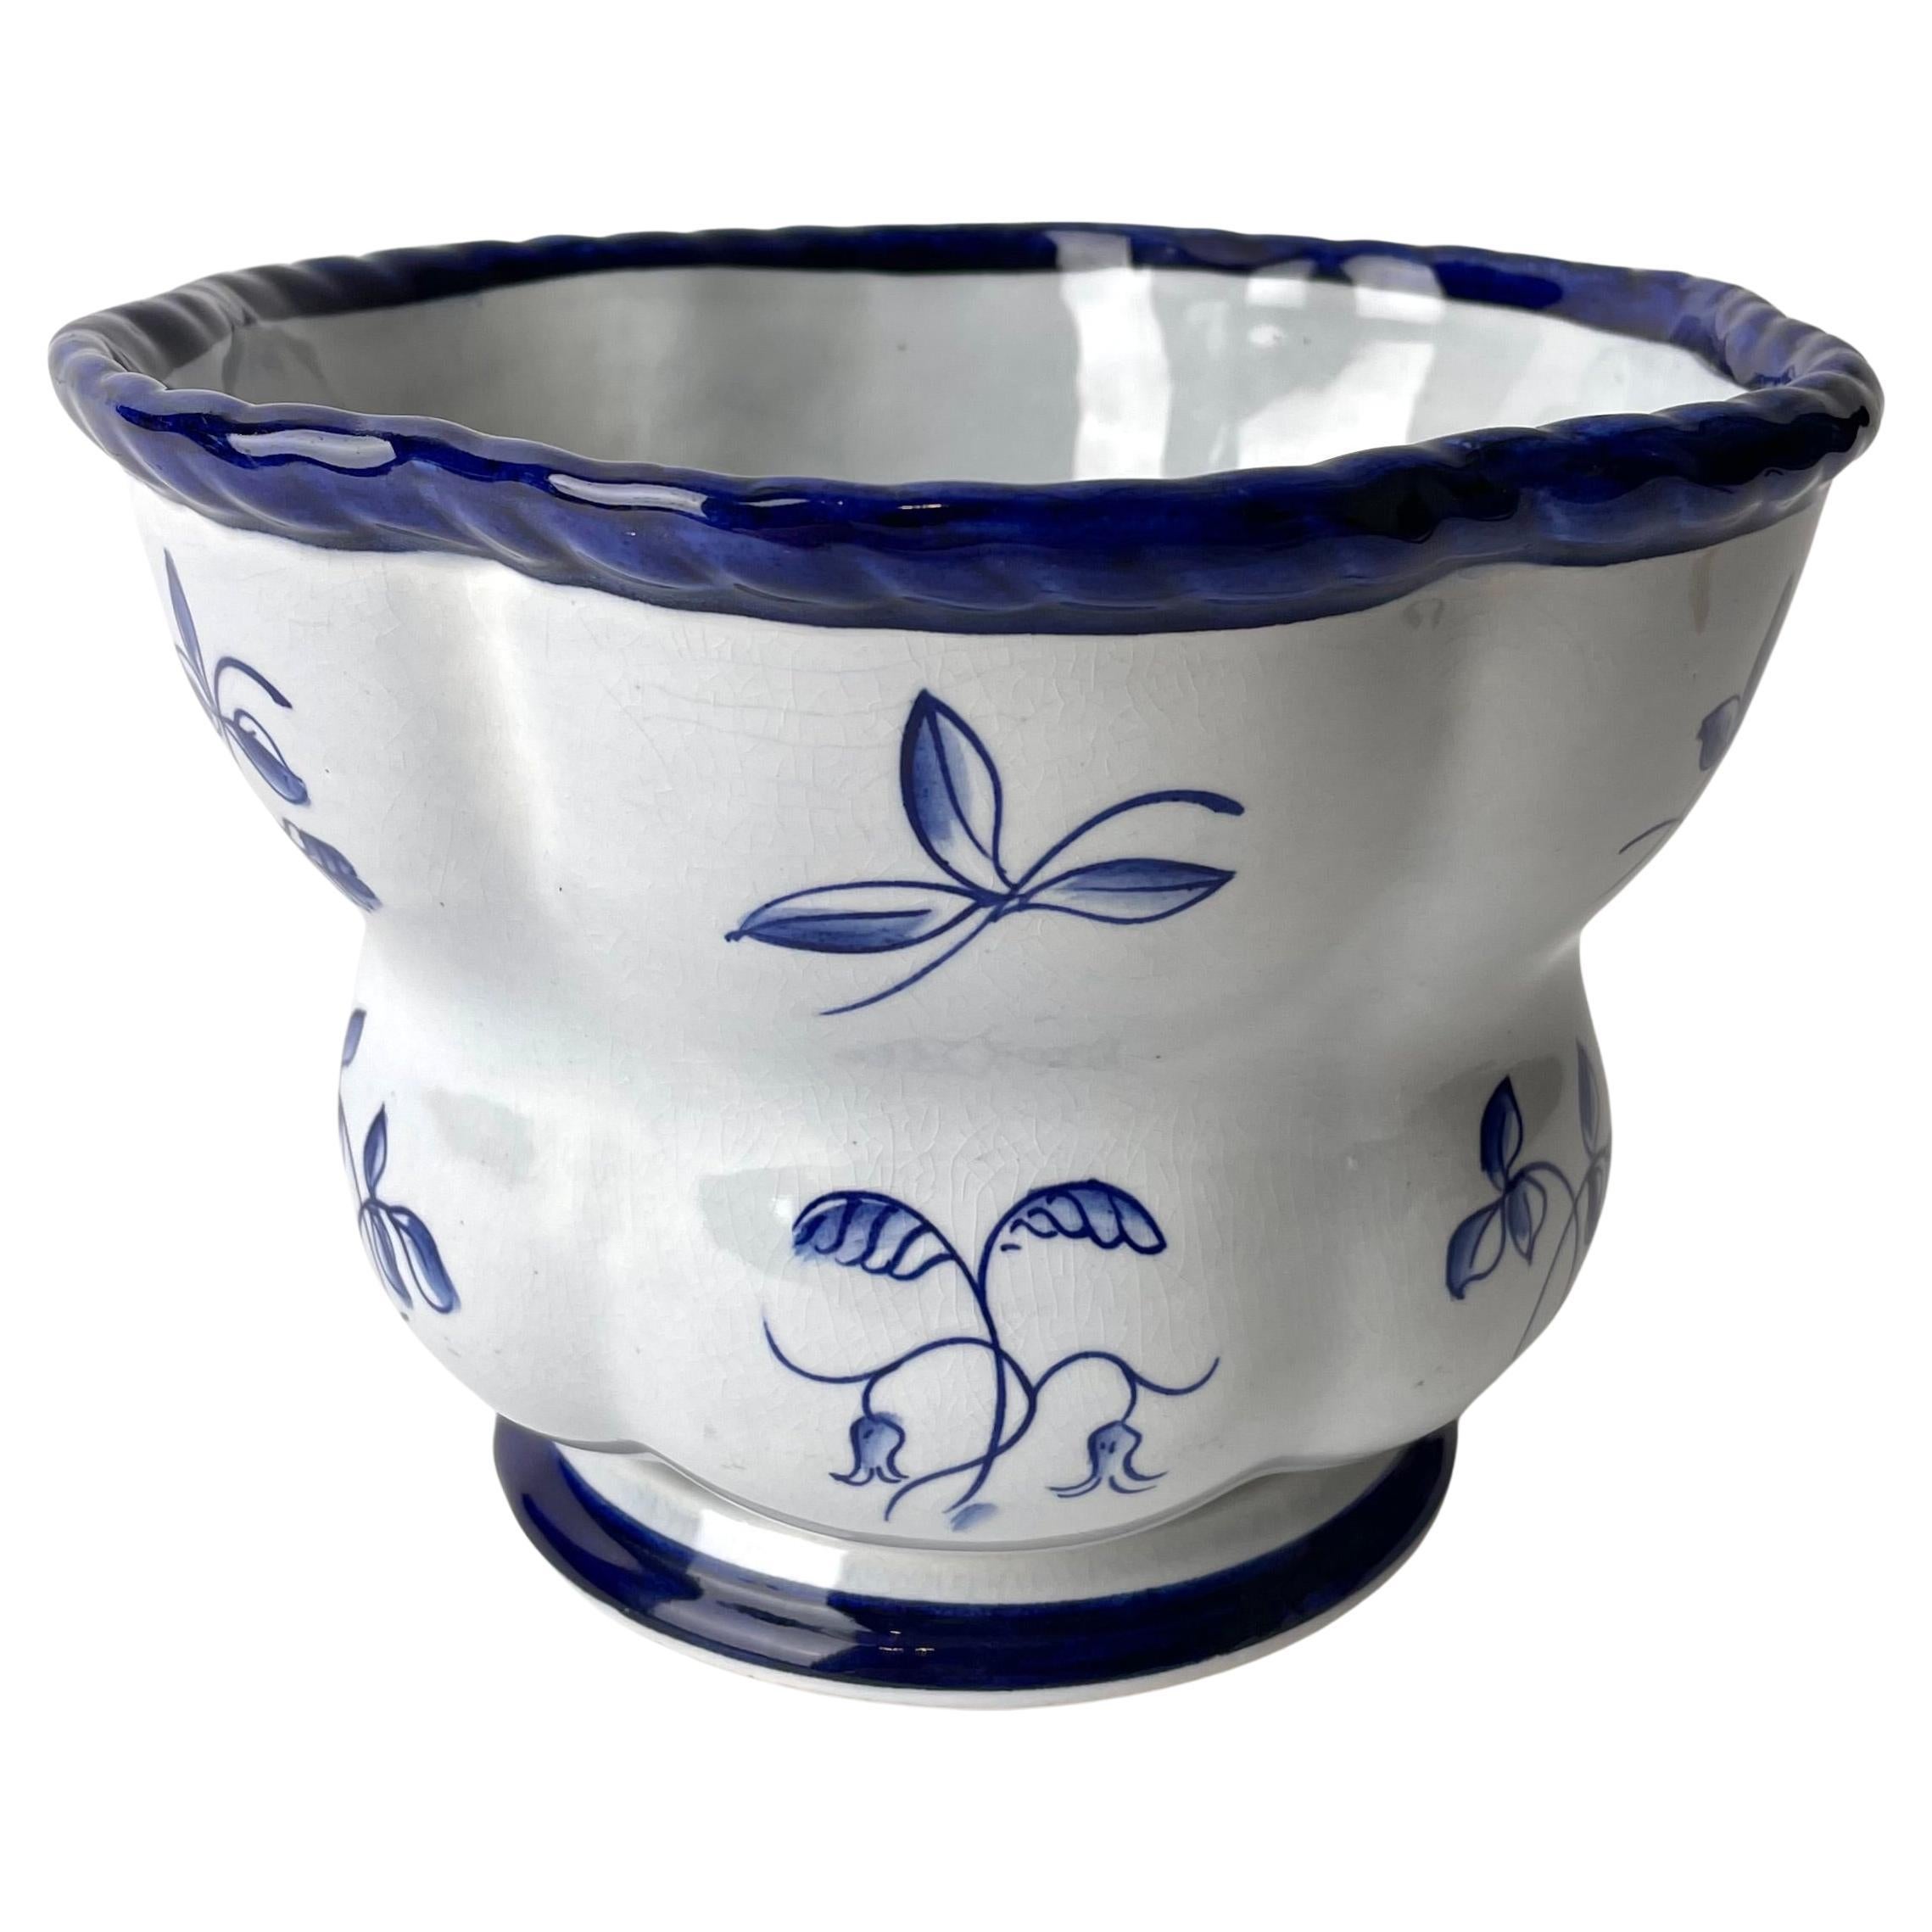 Ceramic Flower Pot designed by Arthur Percy in Swedish Grace, 1920s